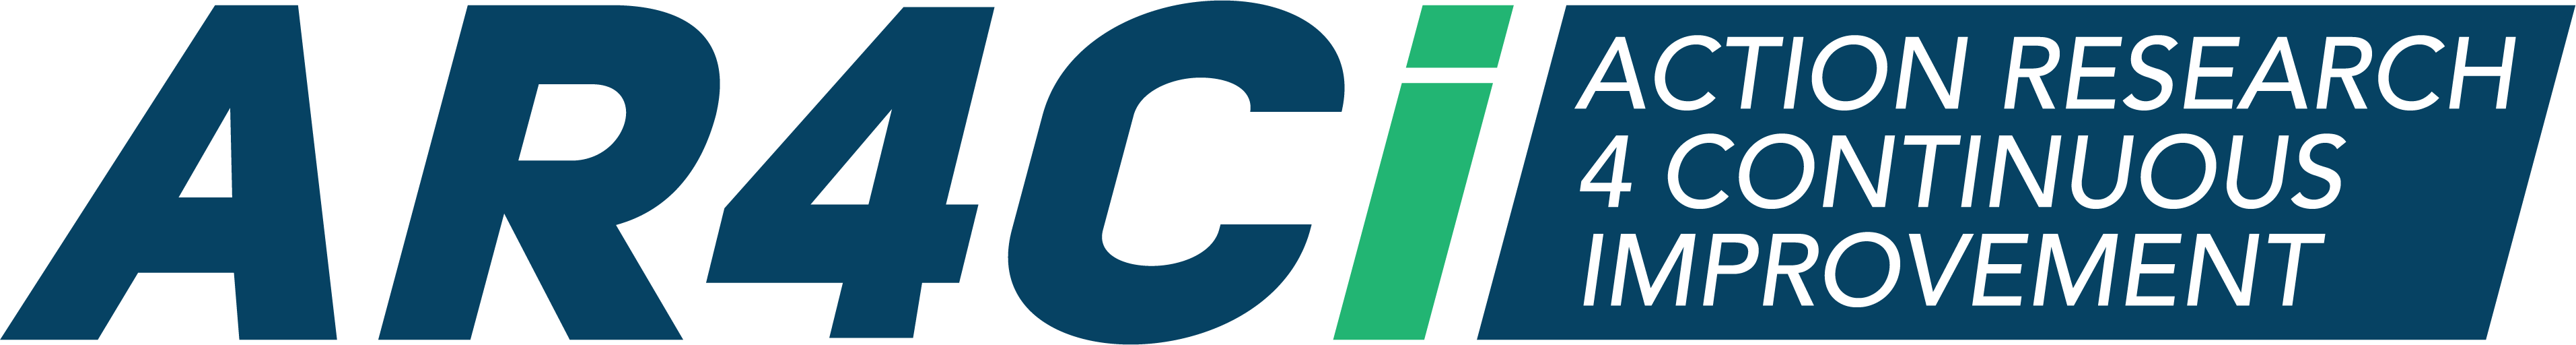 AR4C Logo